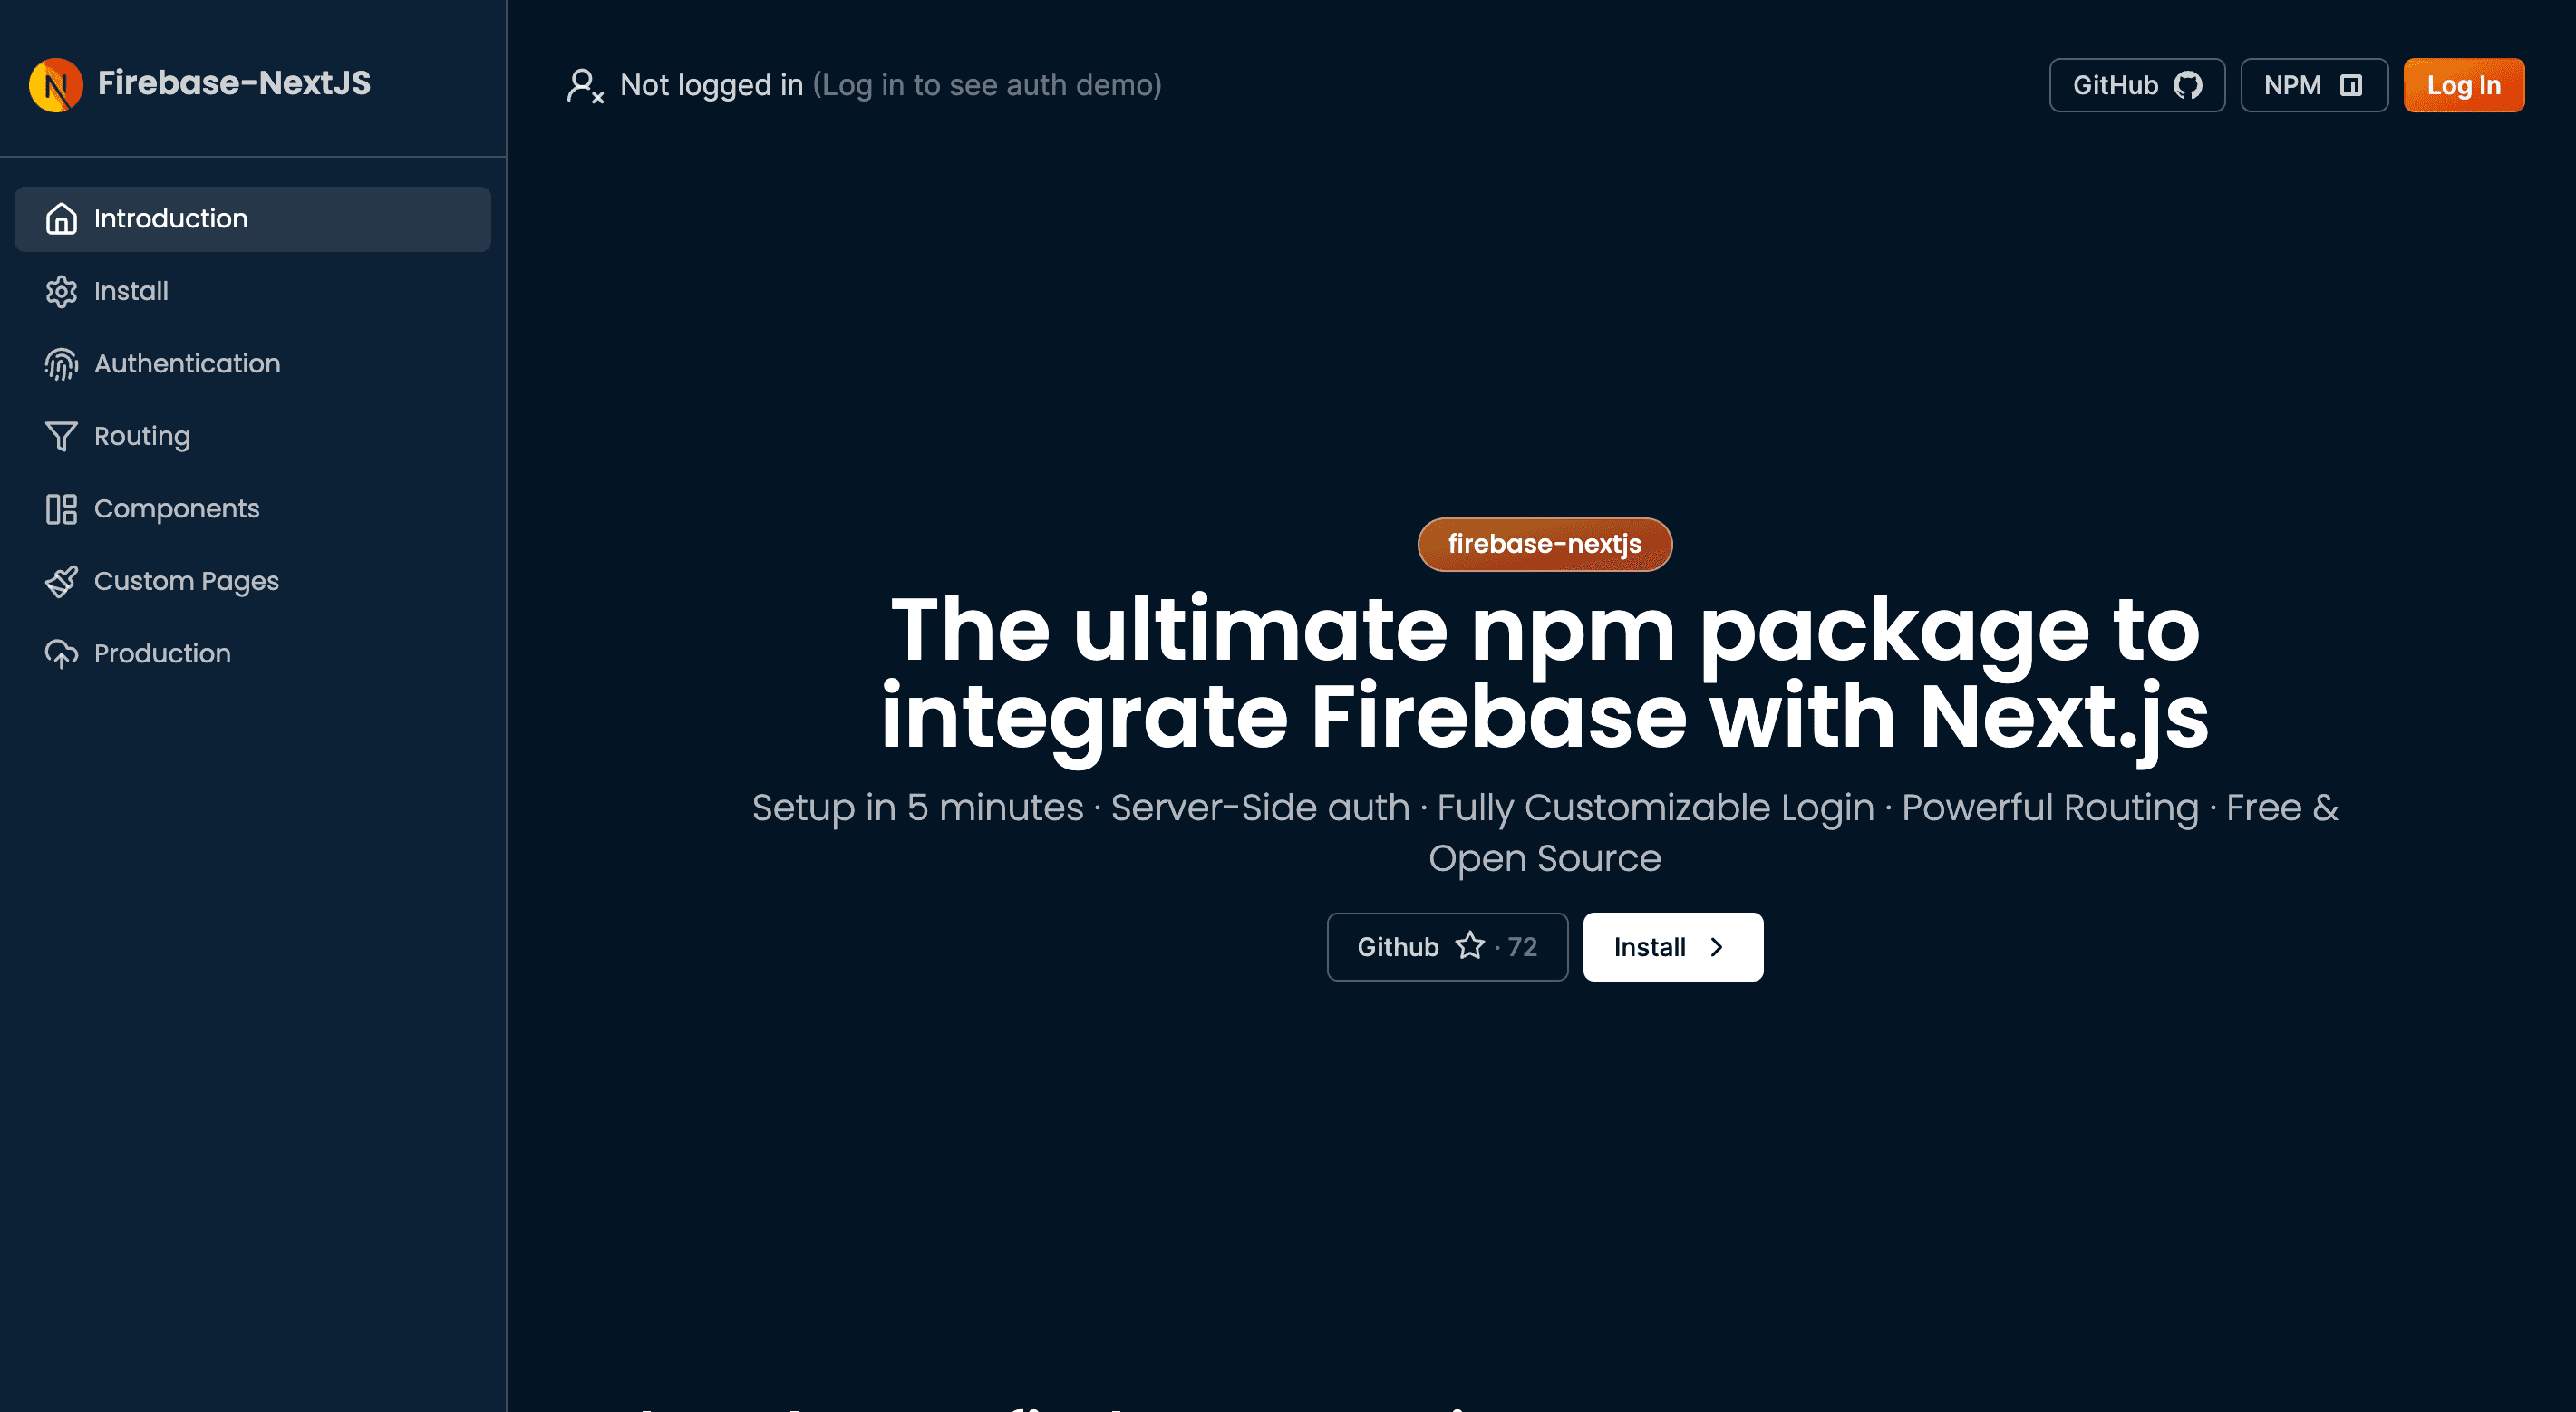 Firebase NextJS